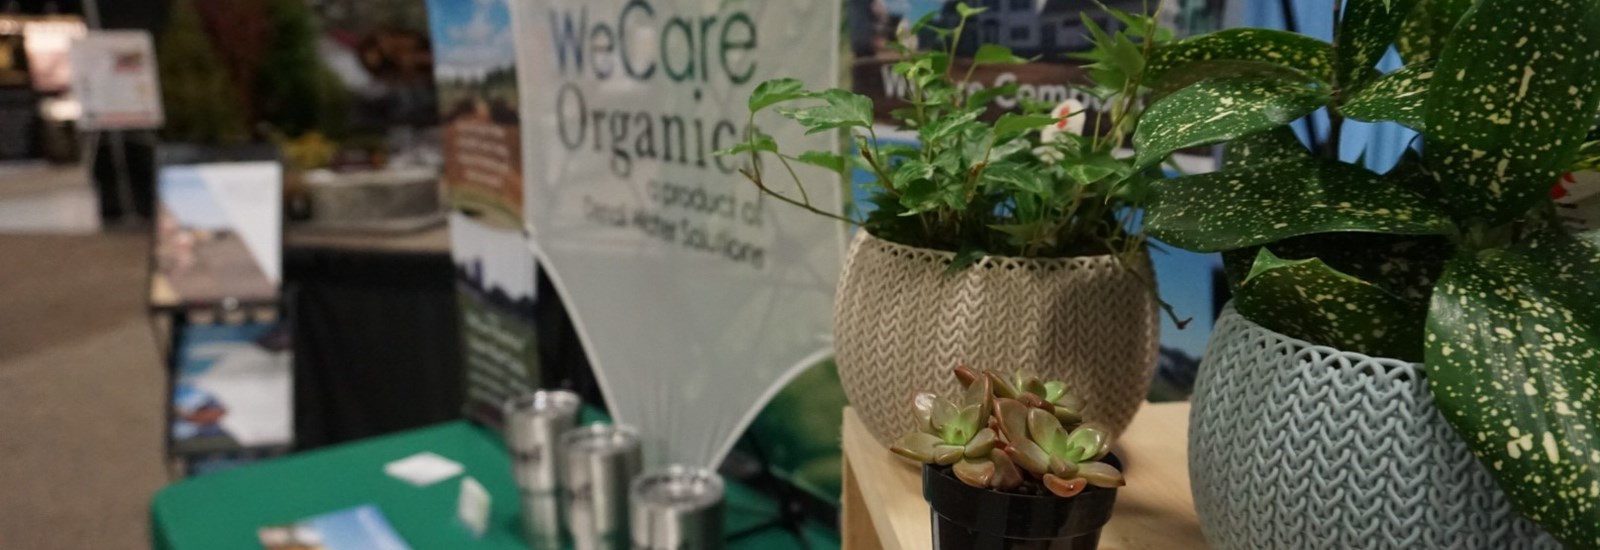 The WeCare Organics Trade Show Booth